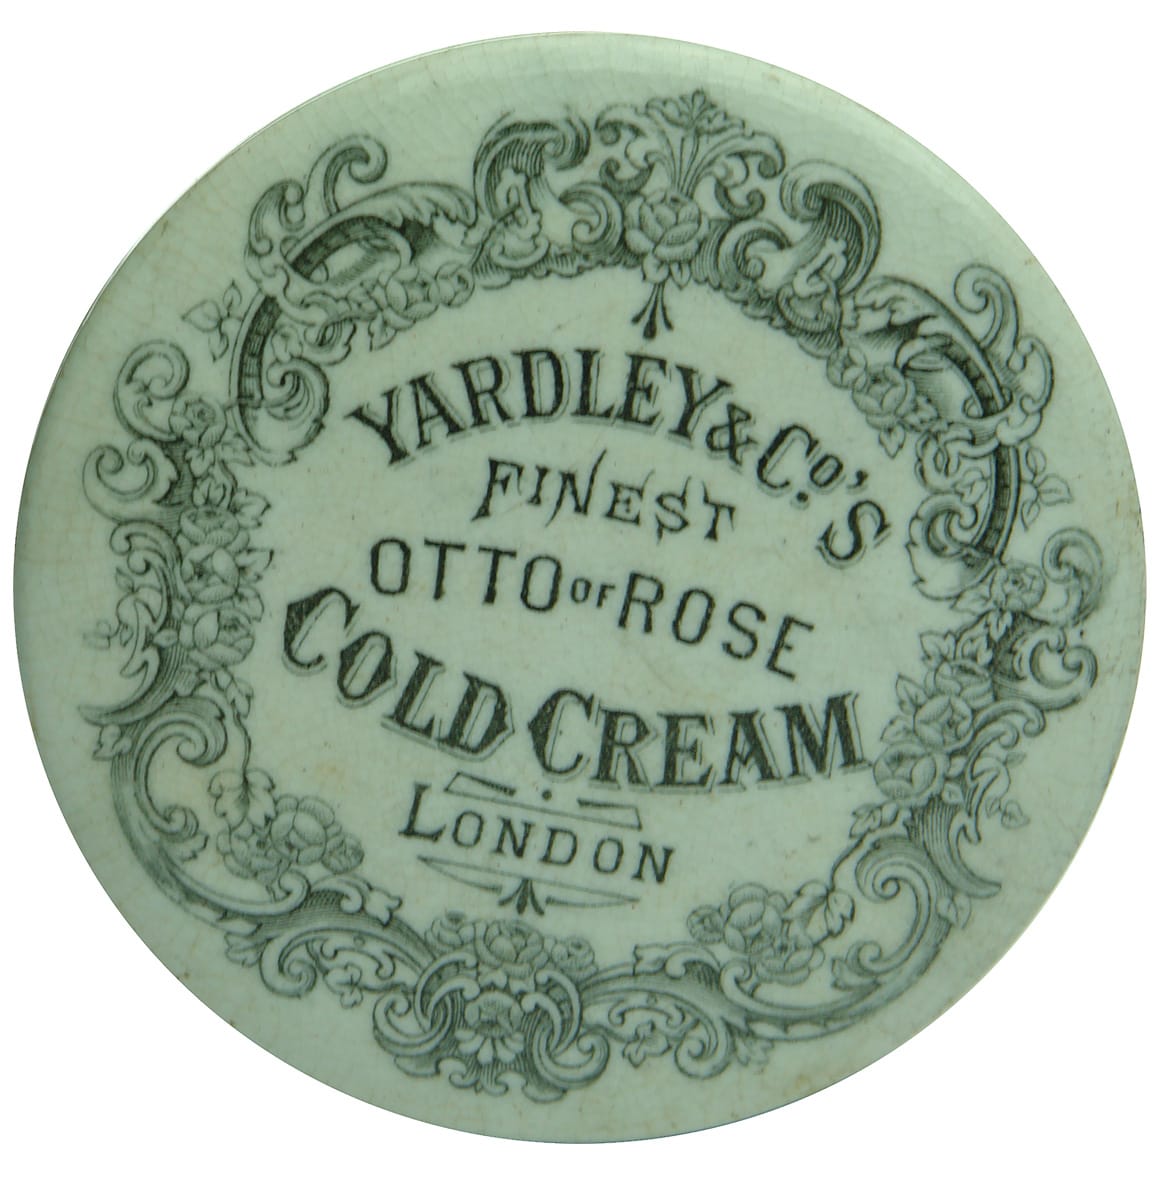 Yardley London Cold Cream Pot Lid